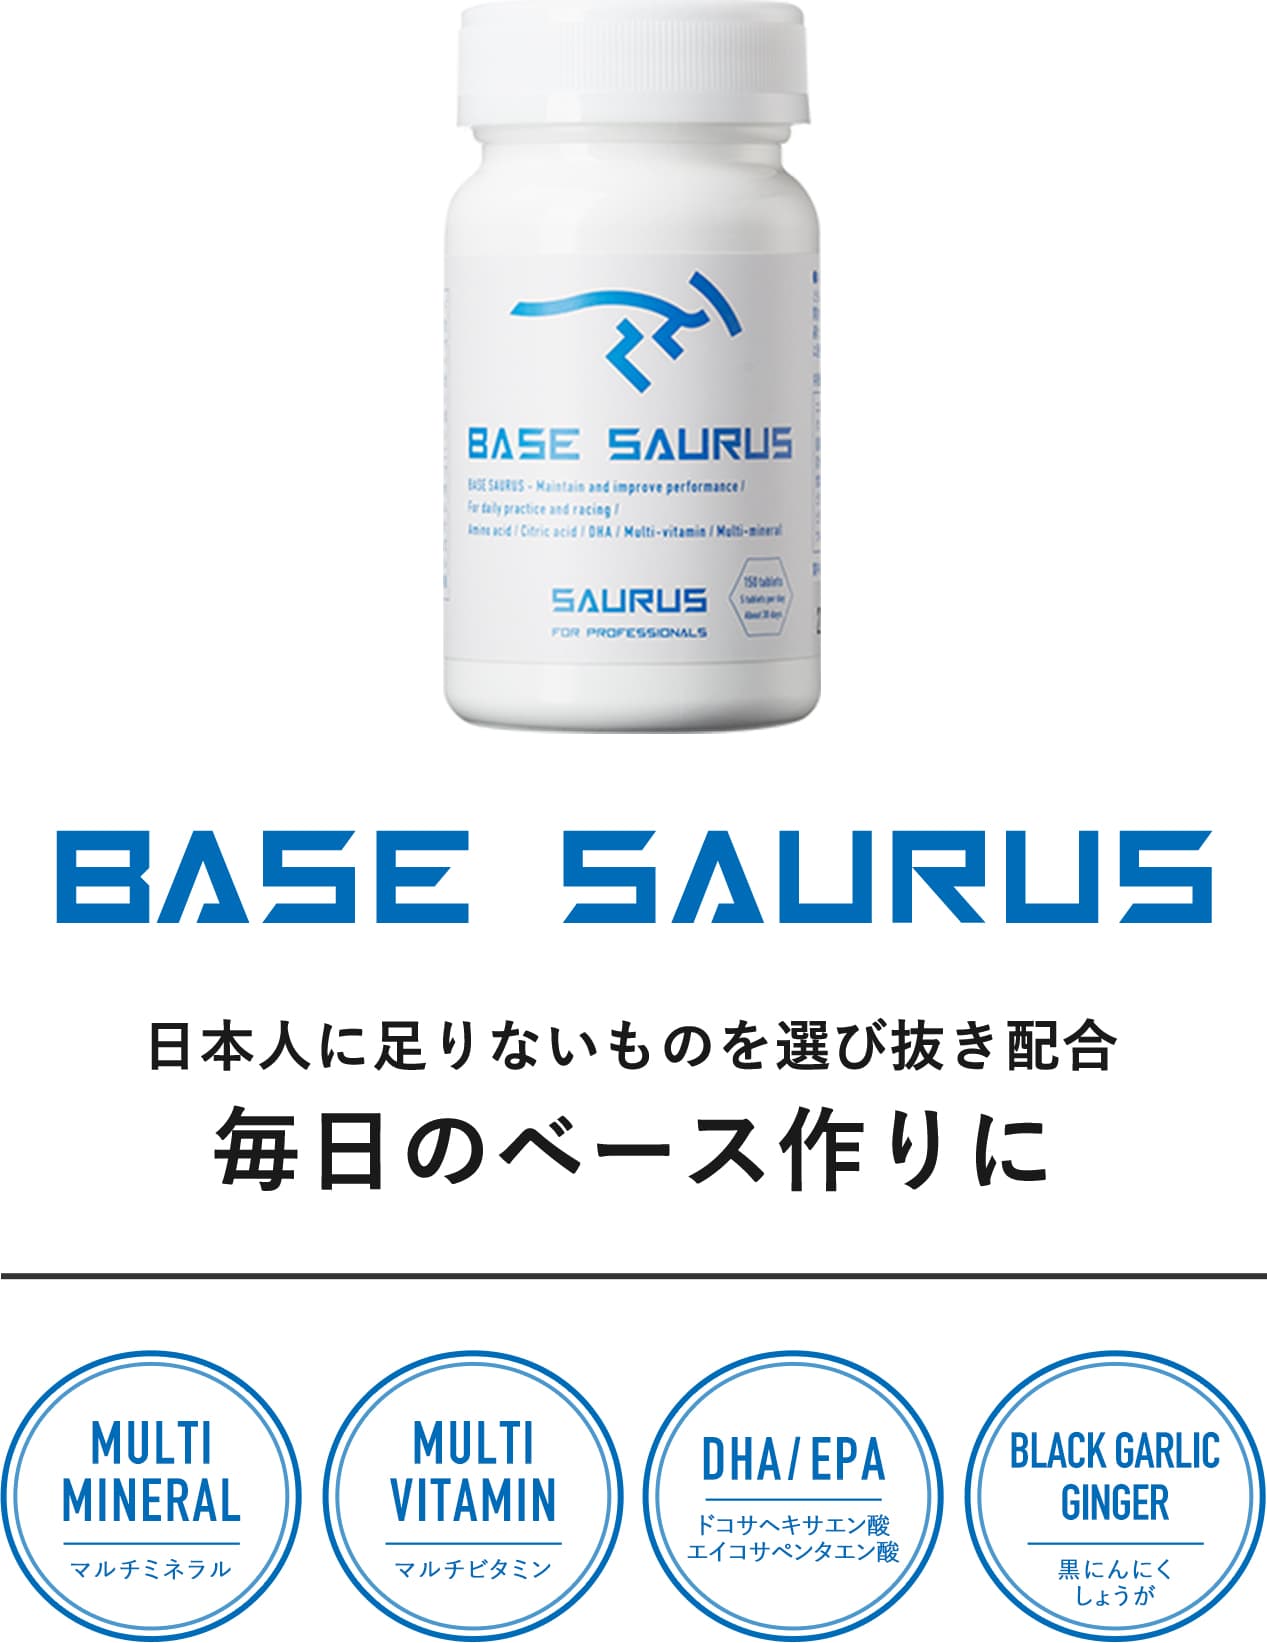 BASE SAURUS 日本人に足りないものを選び抜き配合 毎日のベース作りに